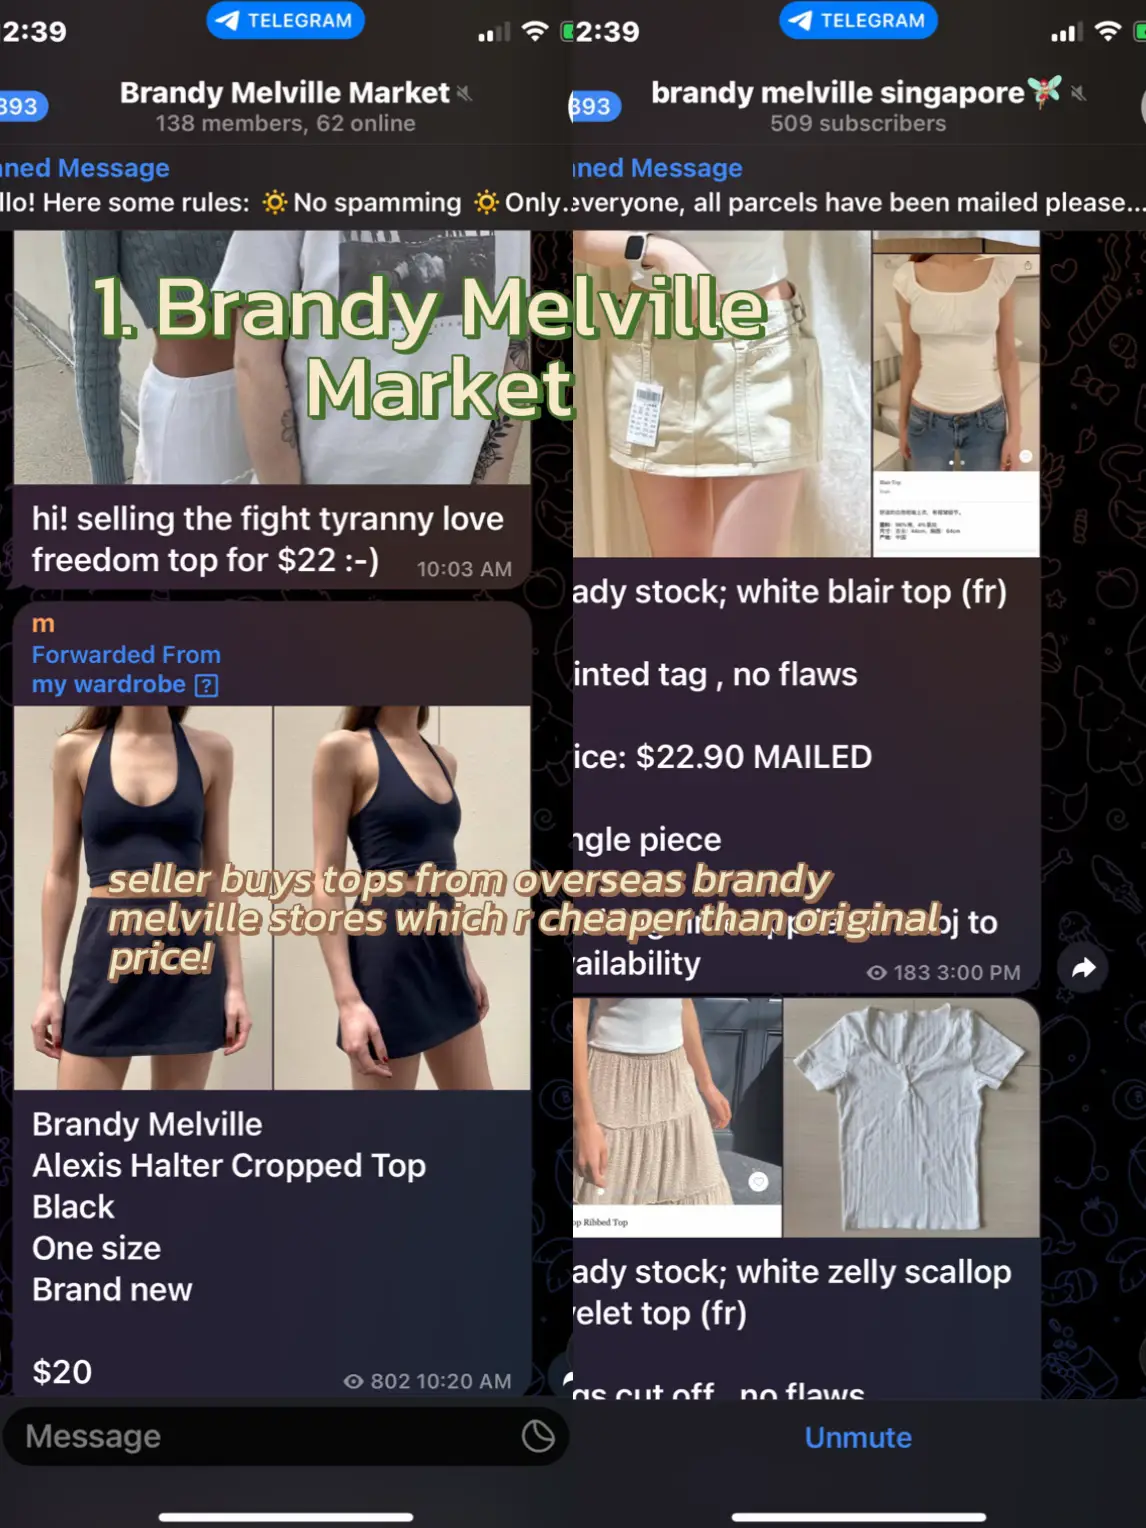 One size fit most: Brandy Melville, the Jerusalem for skinny girls